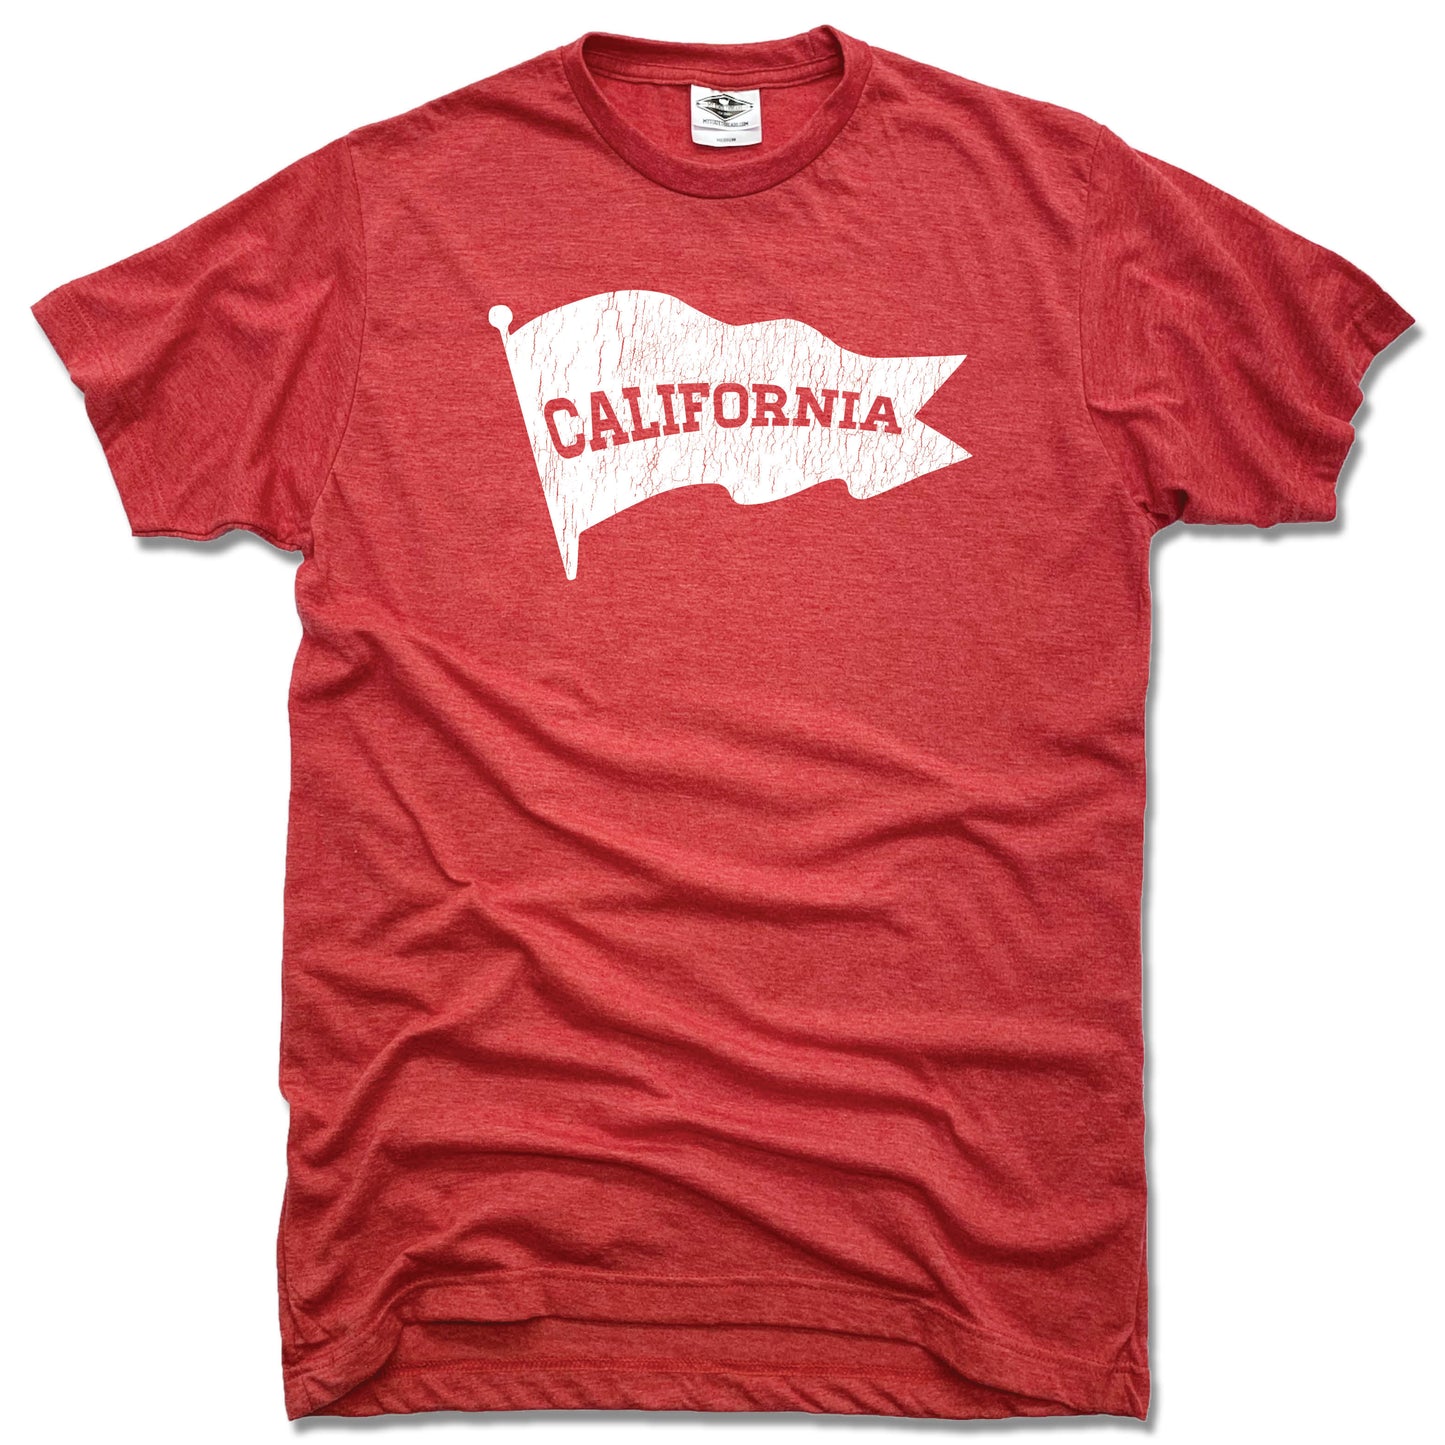 CALIFORNIA PENNANT TEE - RED